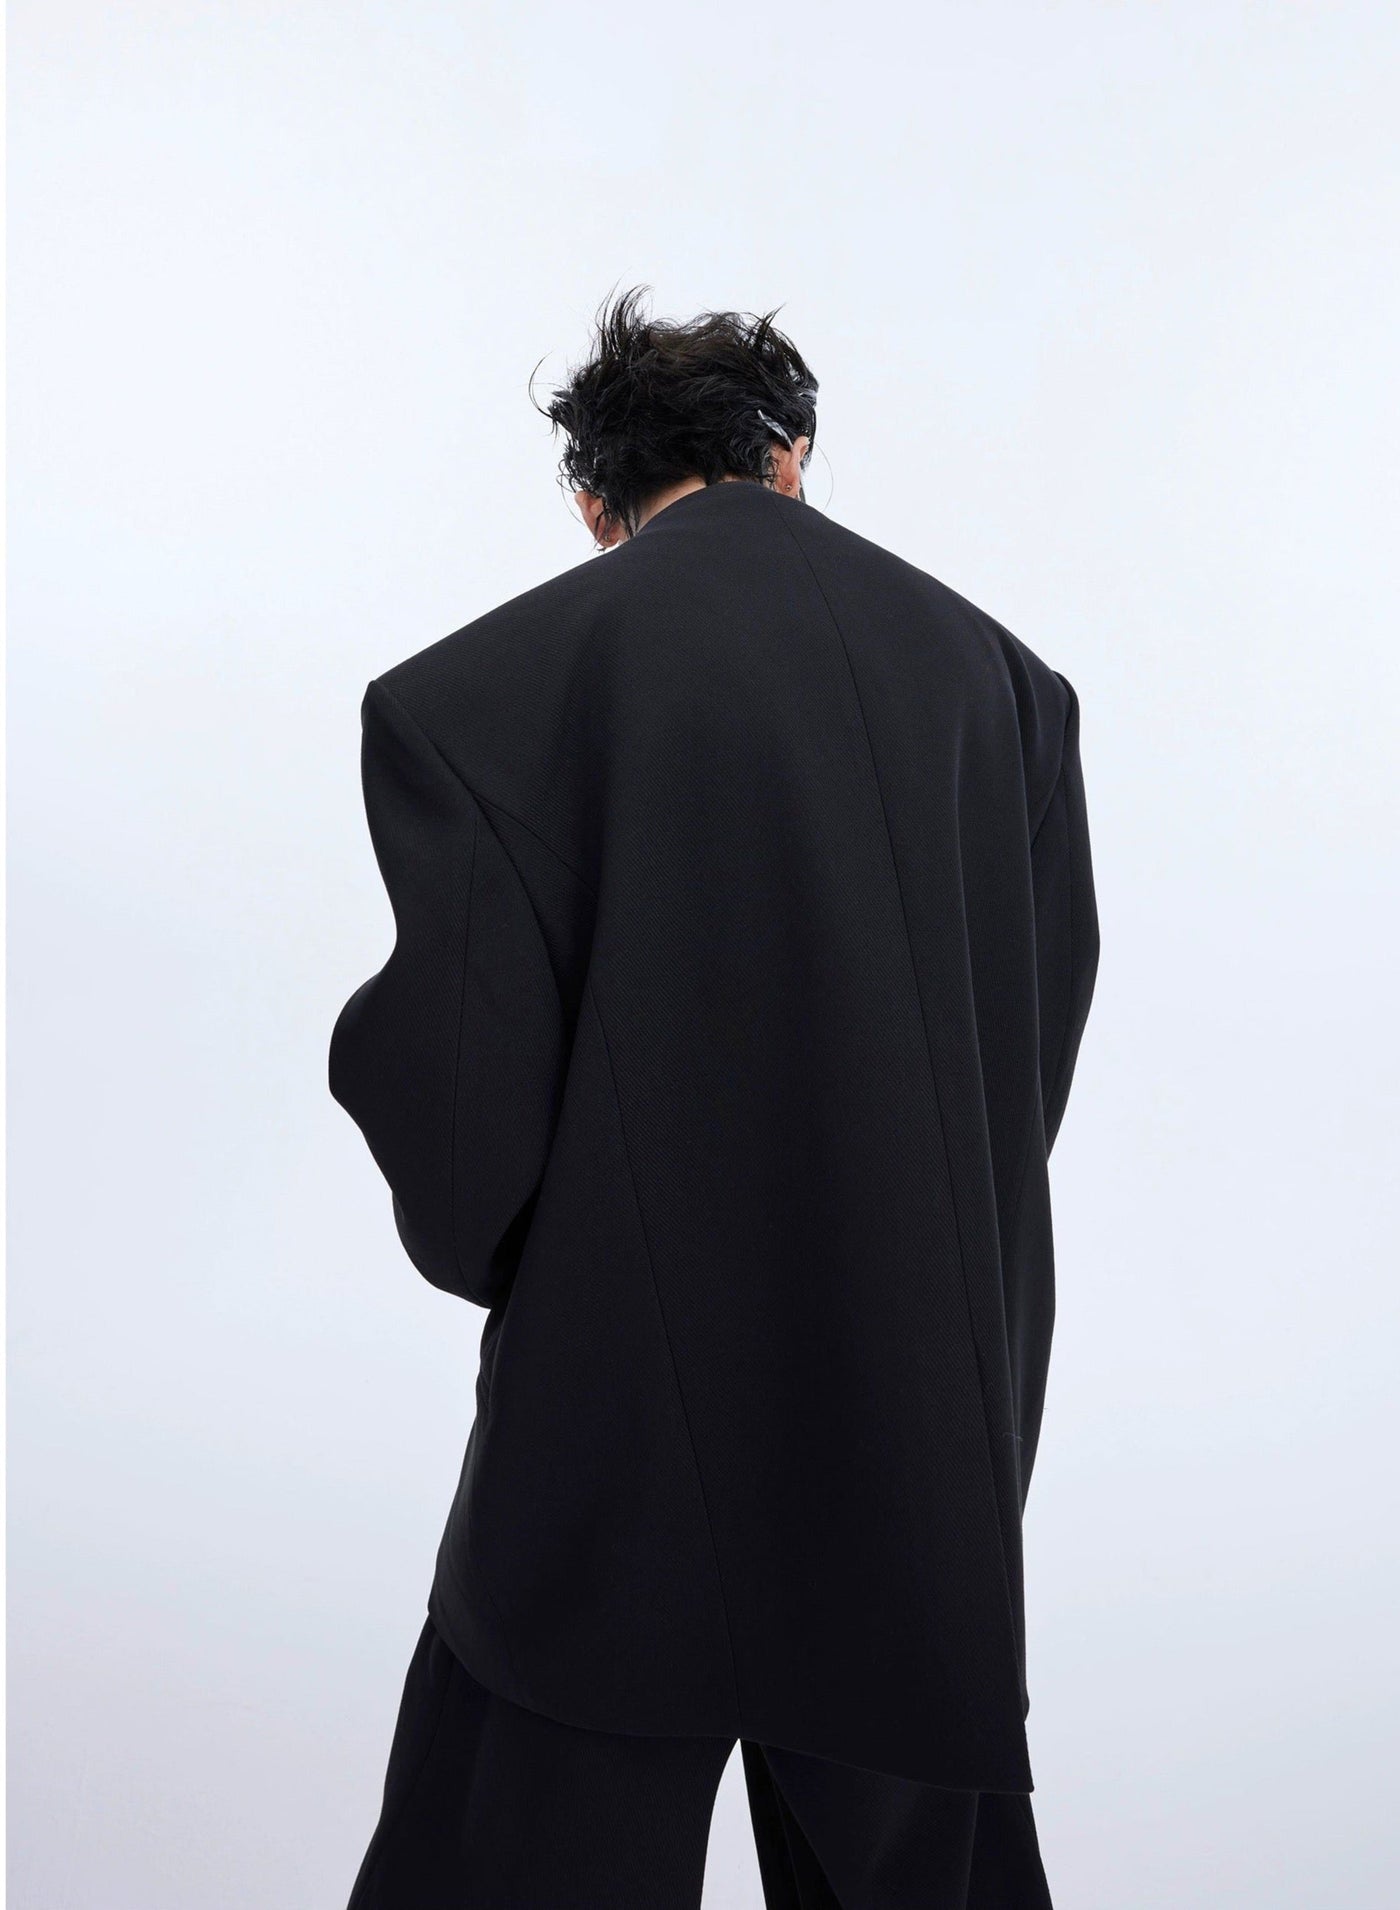 Oversized Buttoned Blazer & Pants Set Korean Street Fashion Clothing Set By Argue Culture Shop Online at OH Vault